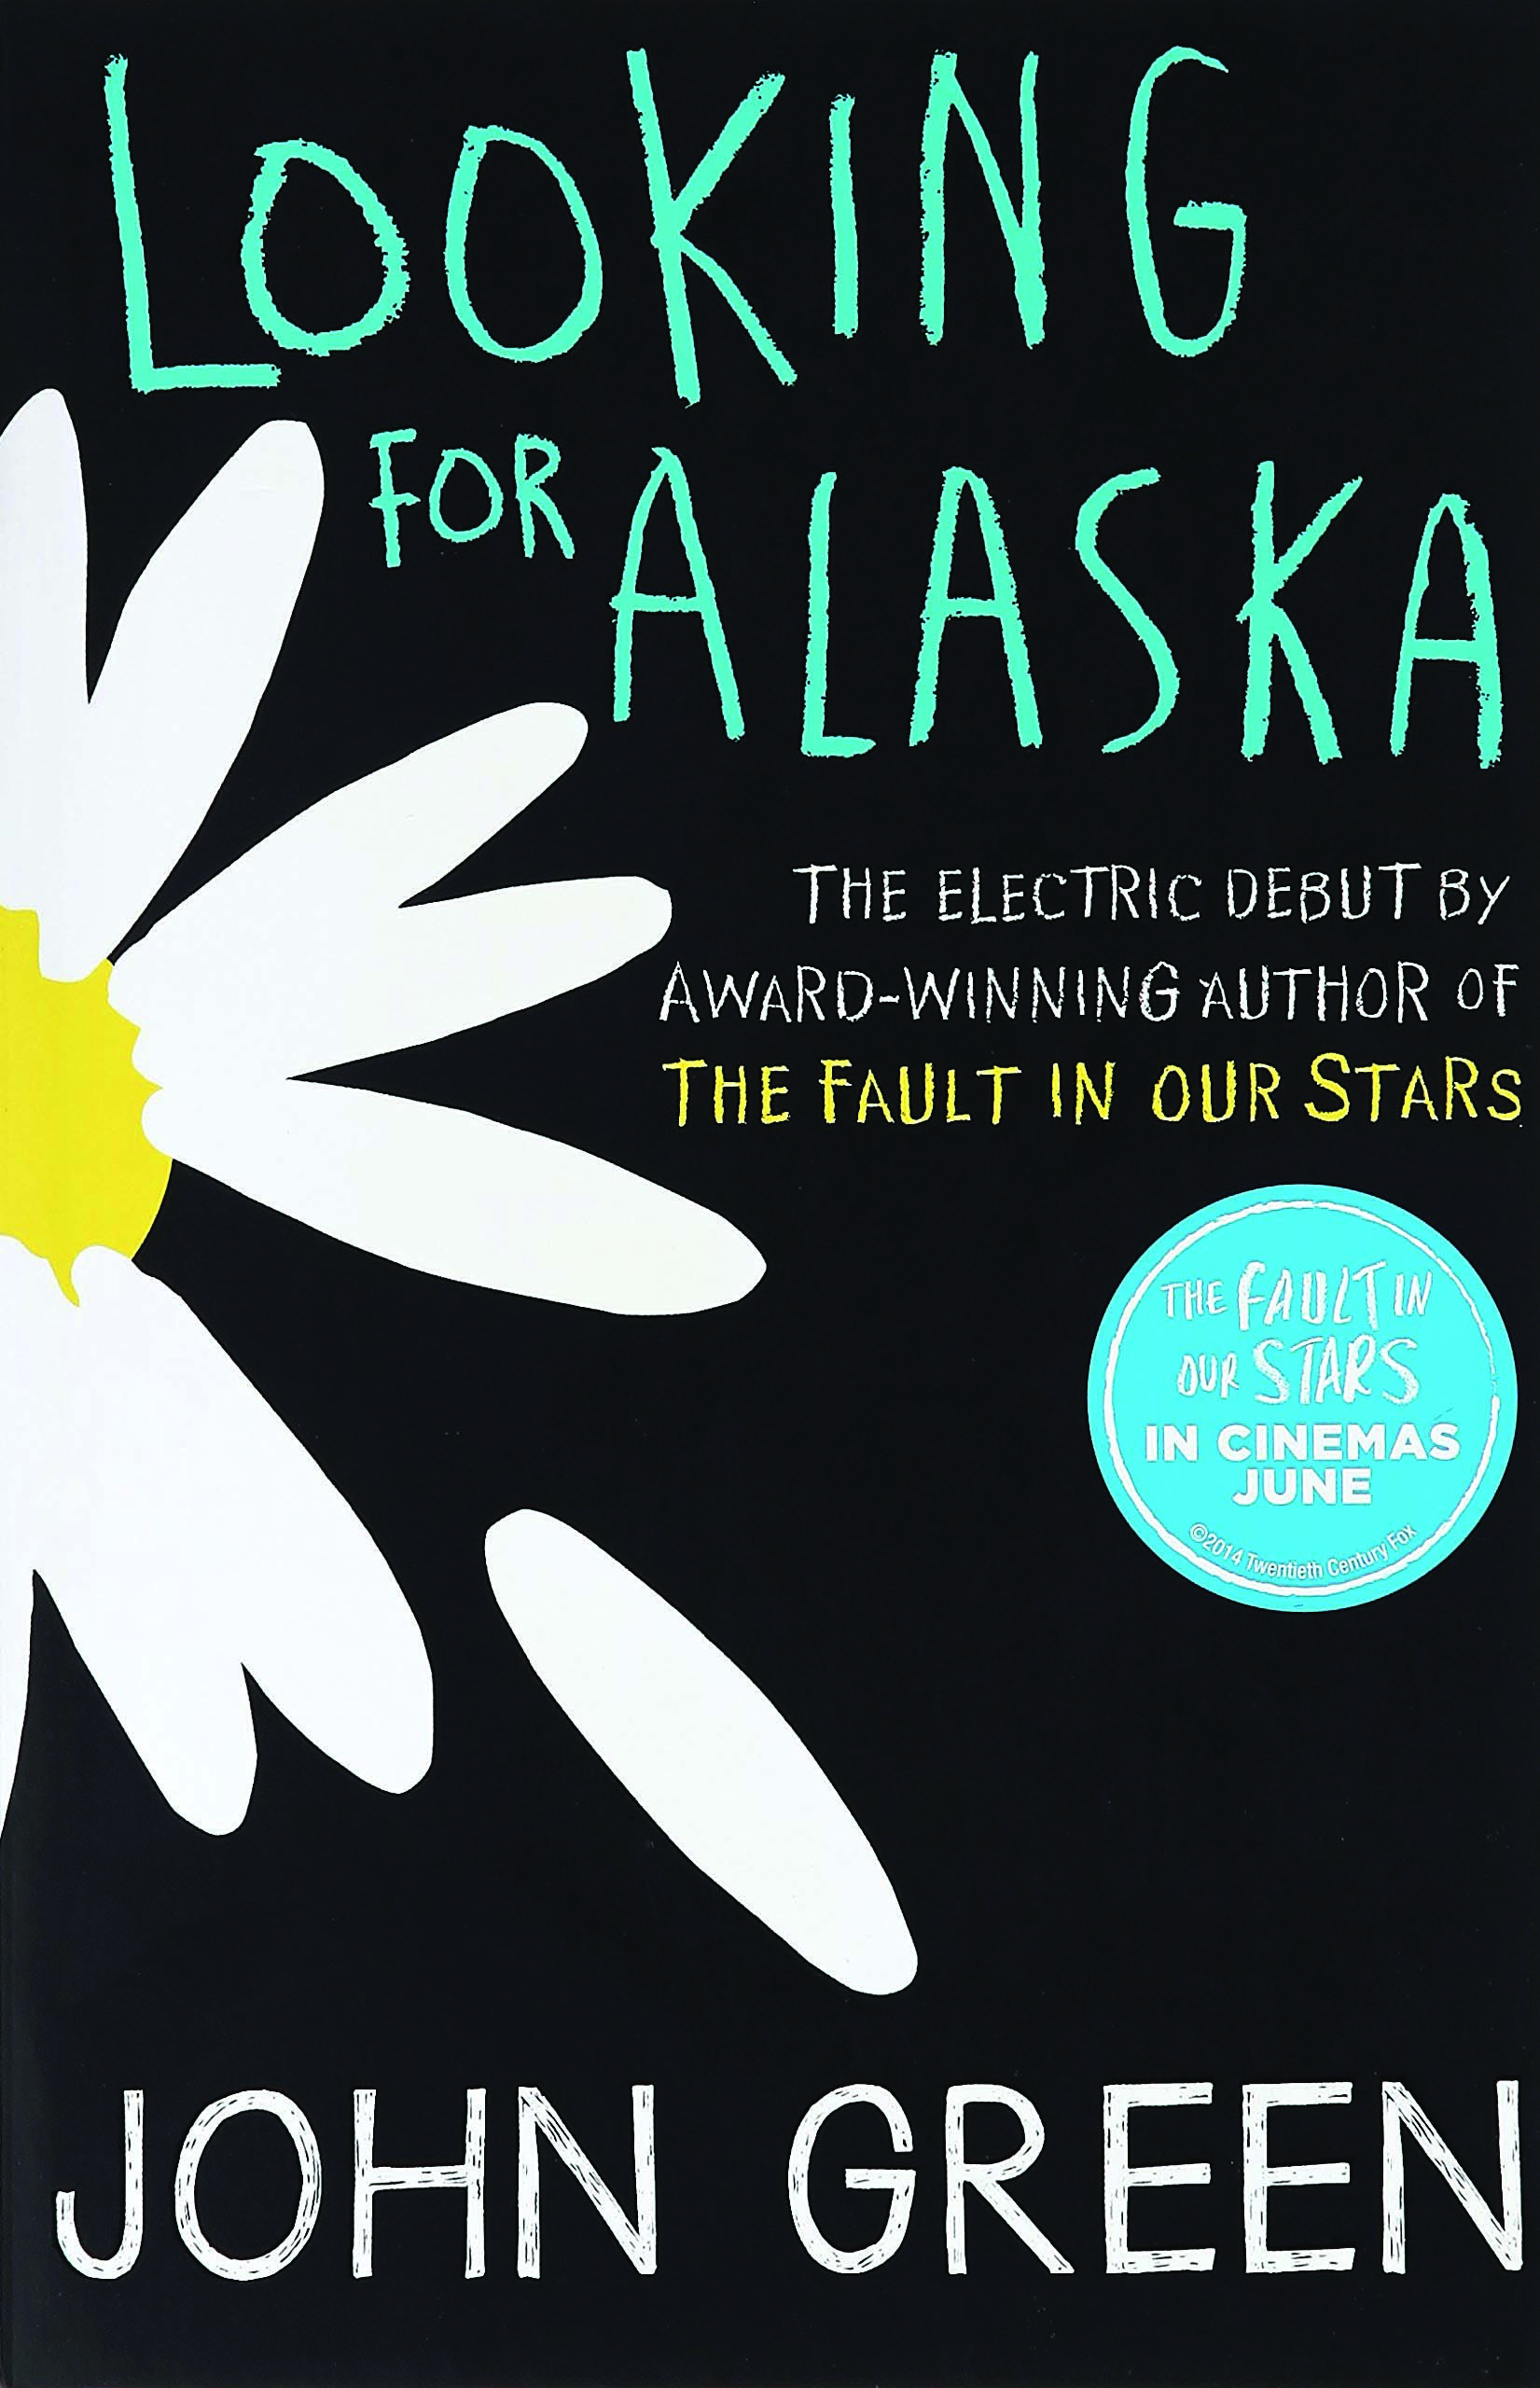 Book Looking for Alaska